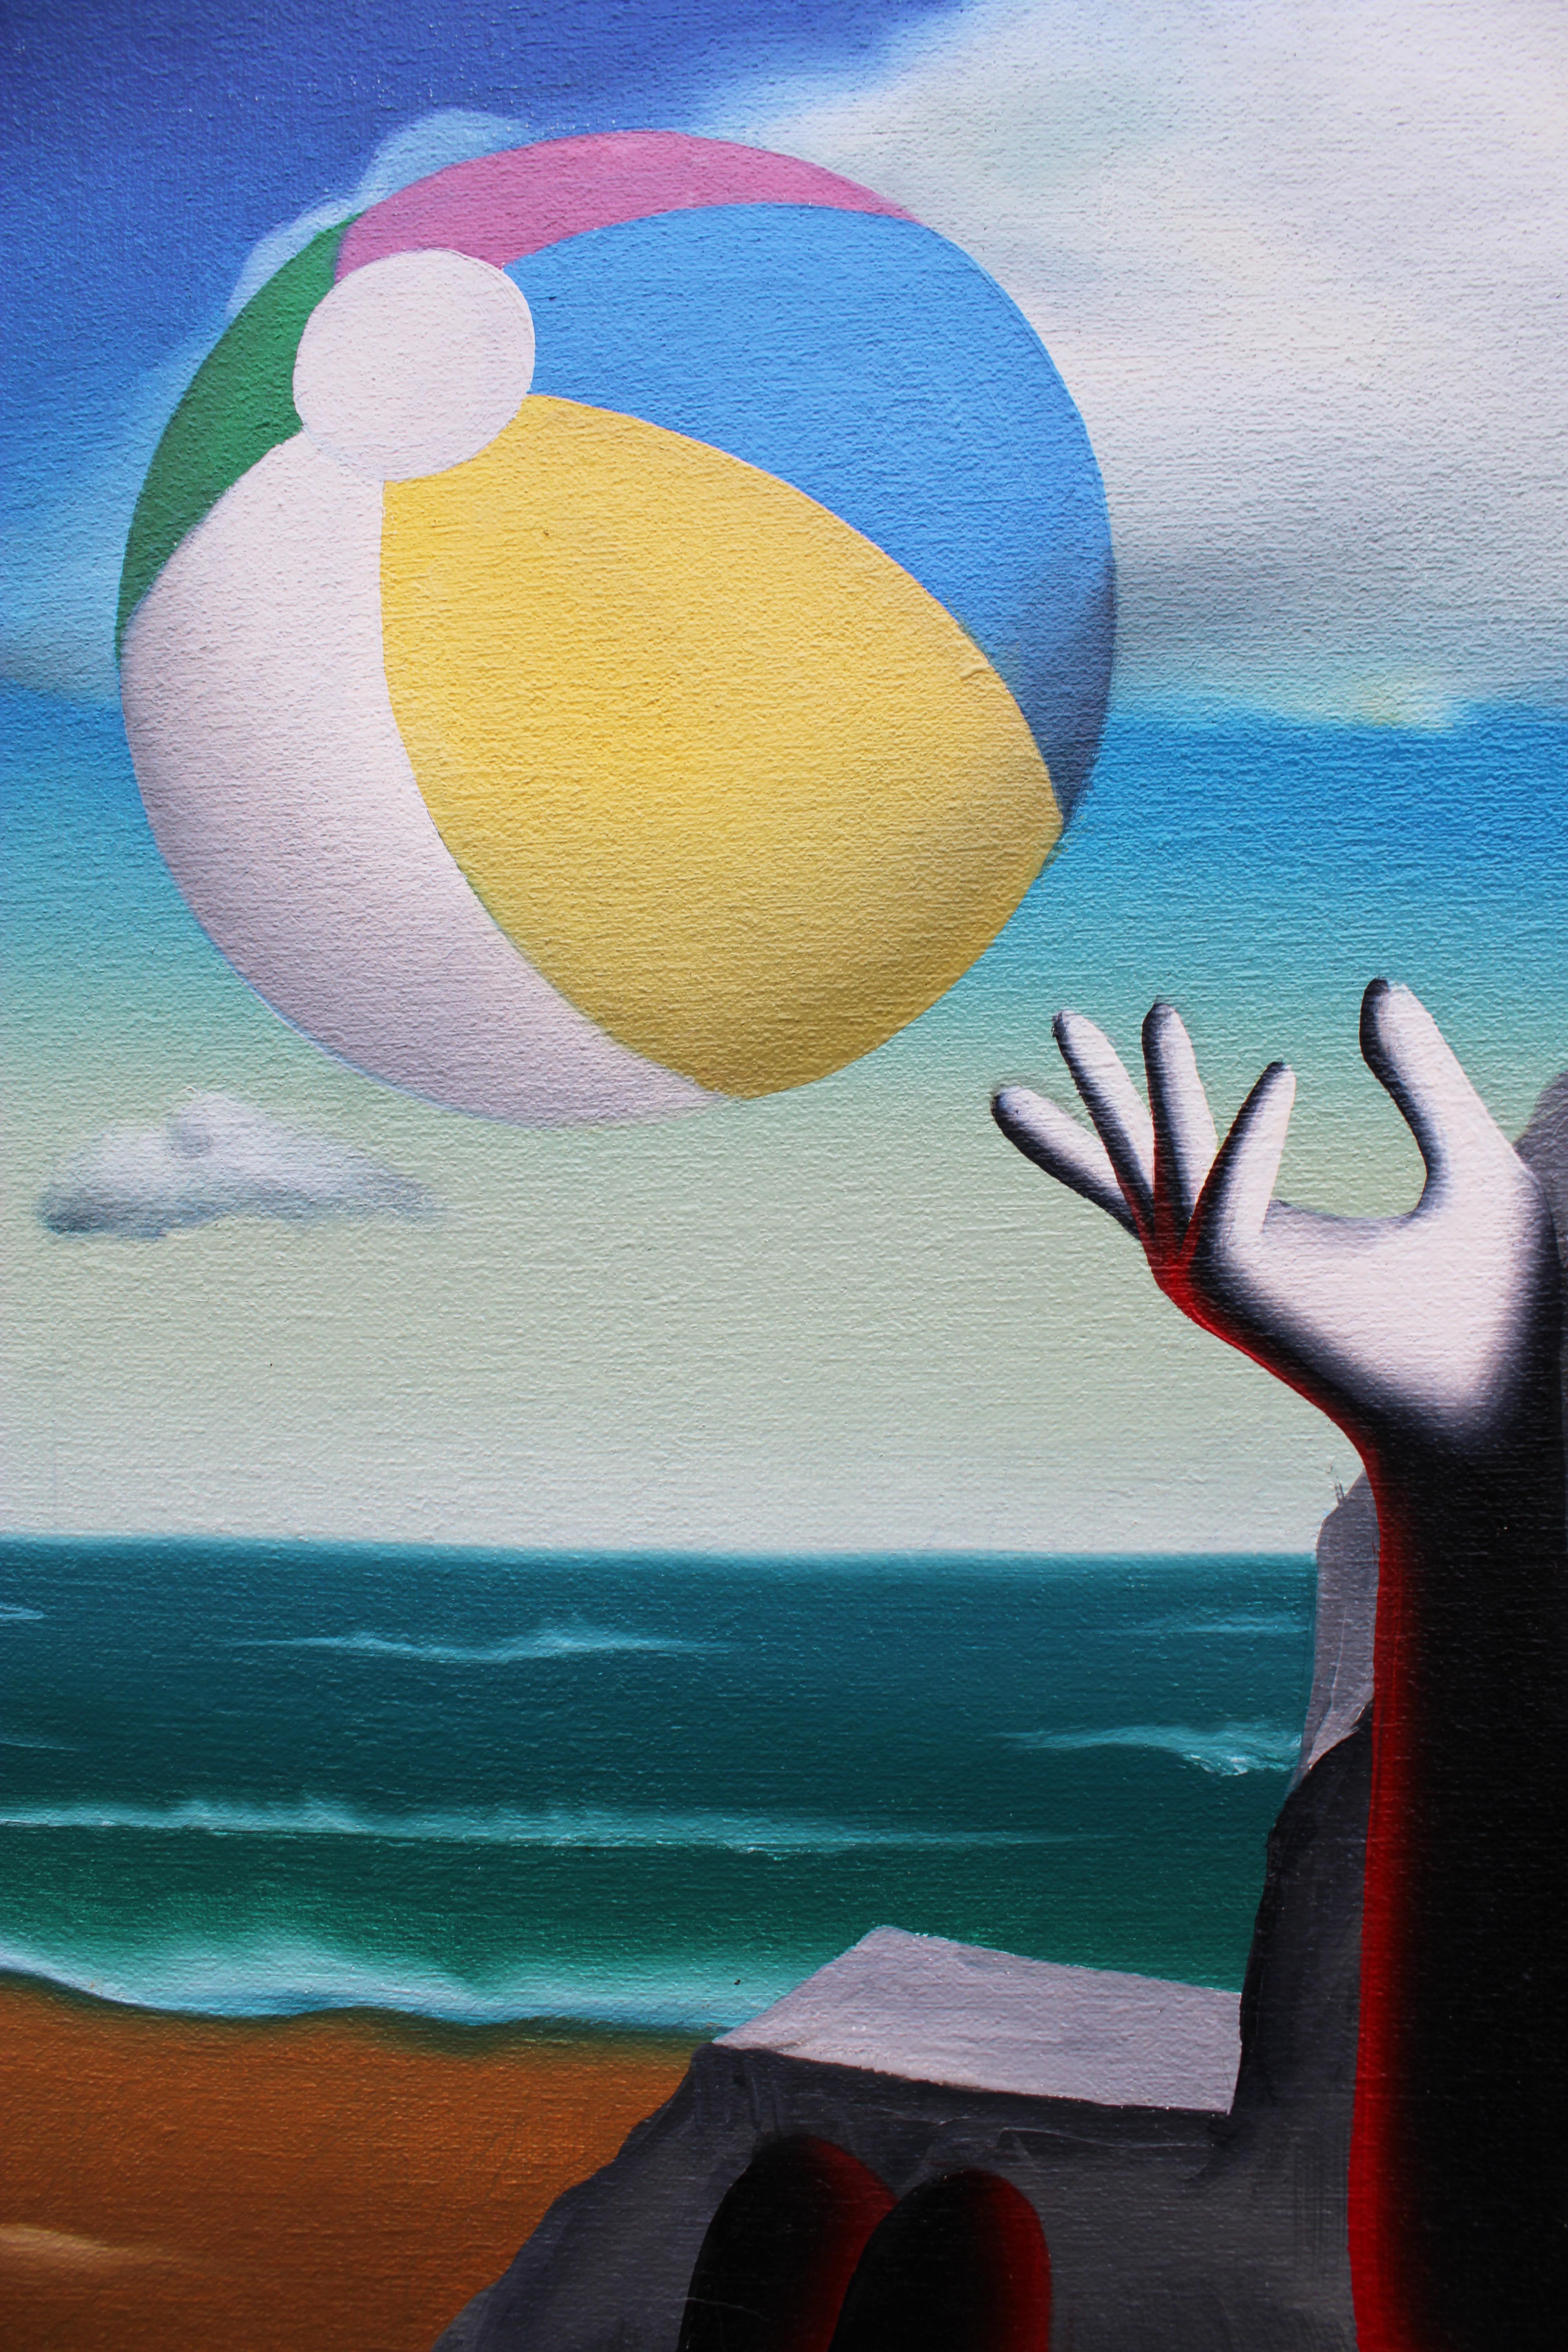 Blank Zone - Painting by Mark Kostabi